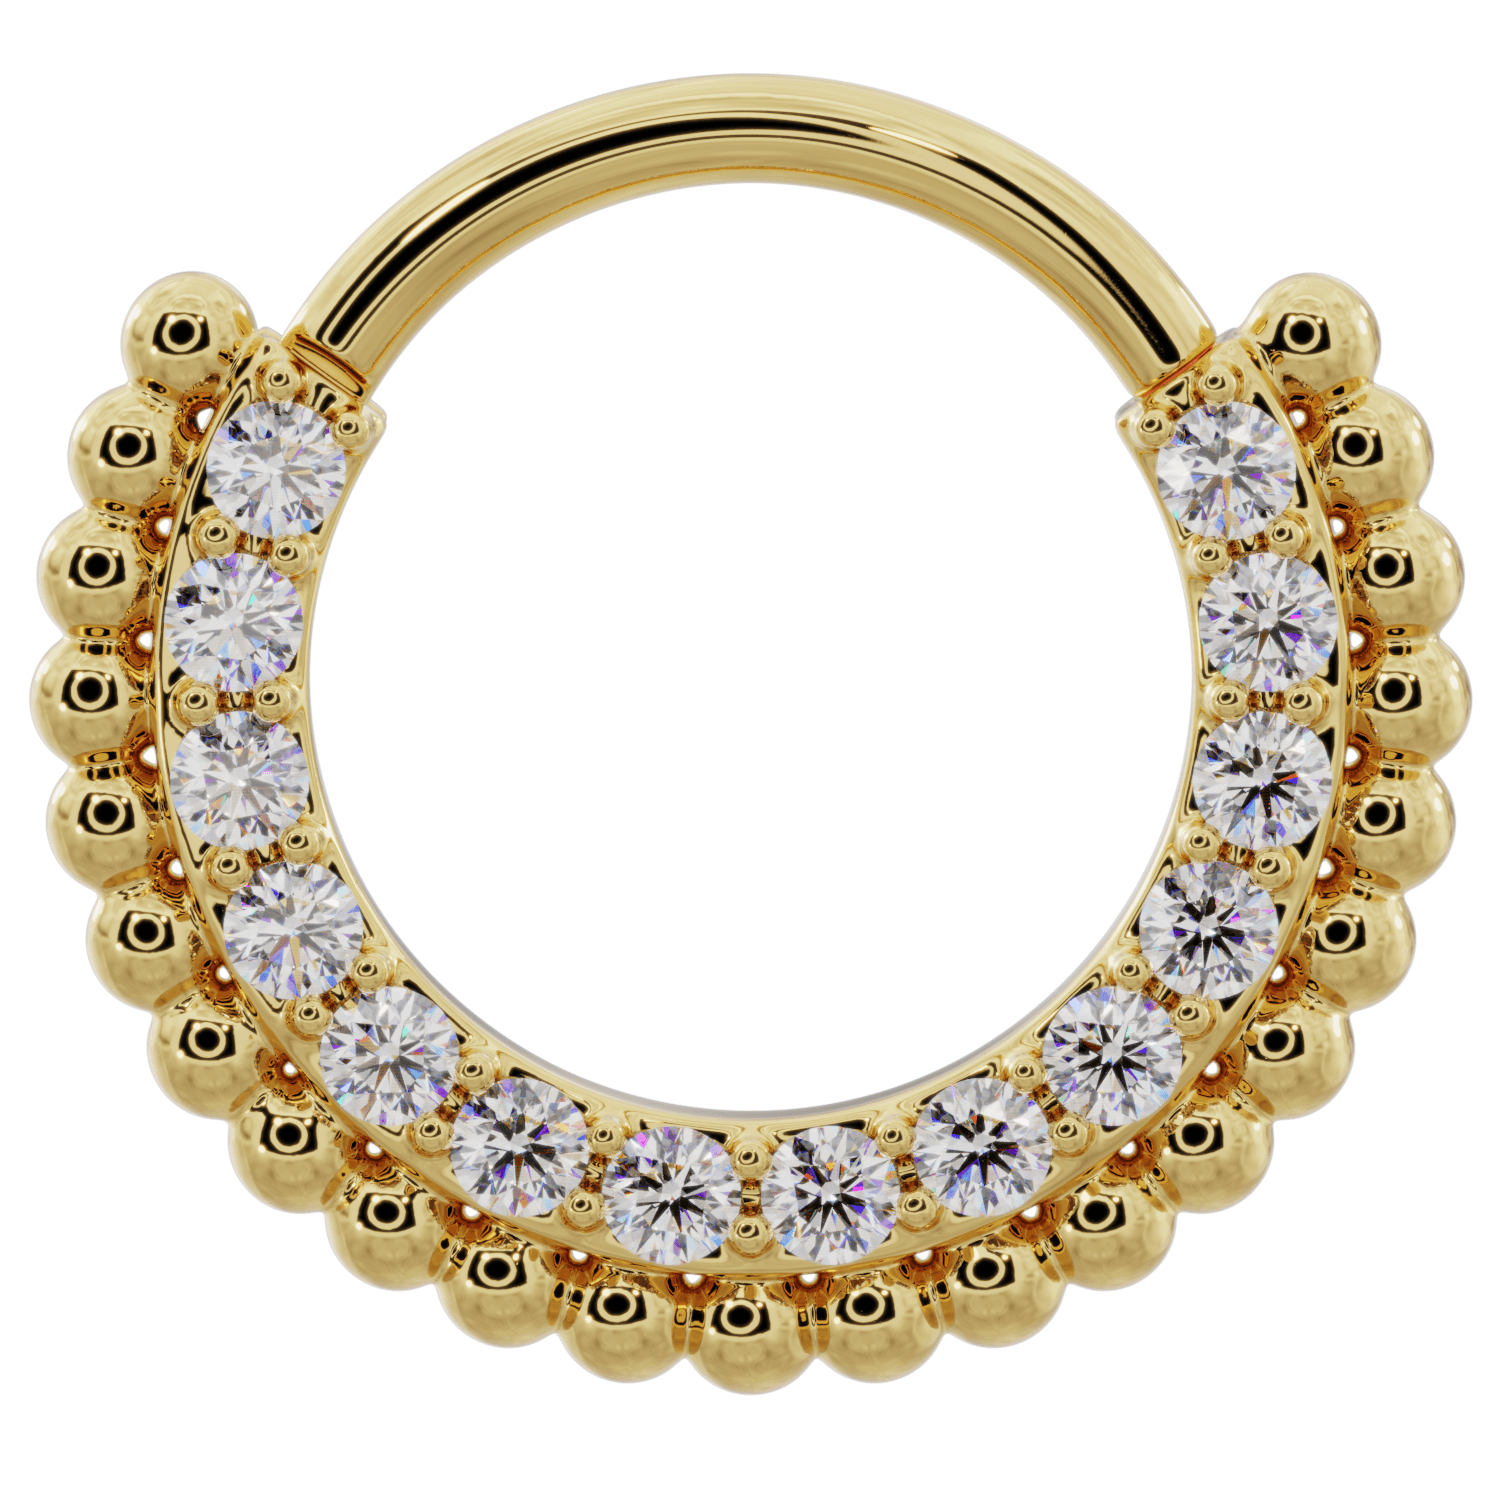 Diamond Beads 14k Gold Clicker Ring Hoop-14K Yellow Gold   14G (1.6mm)   5 8